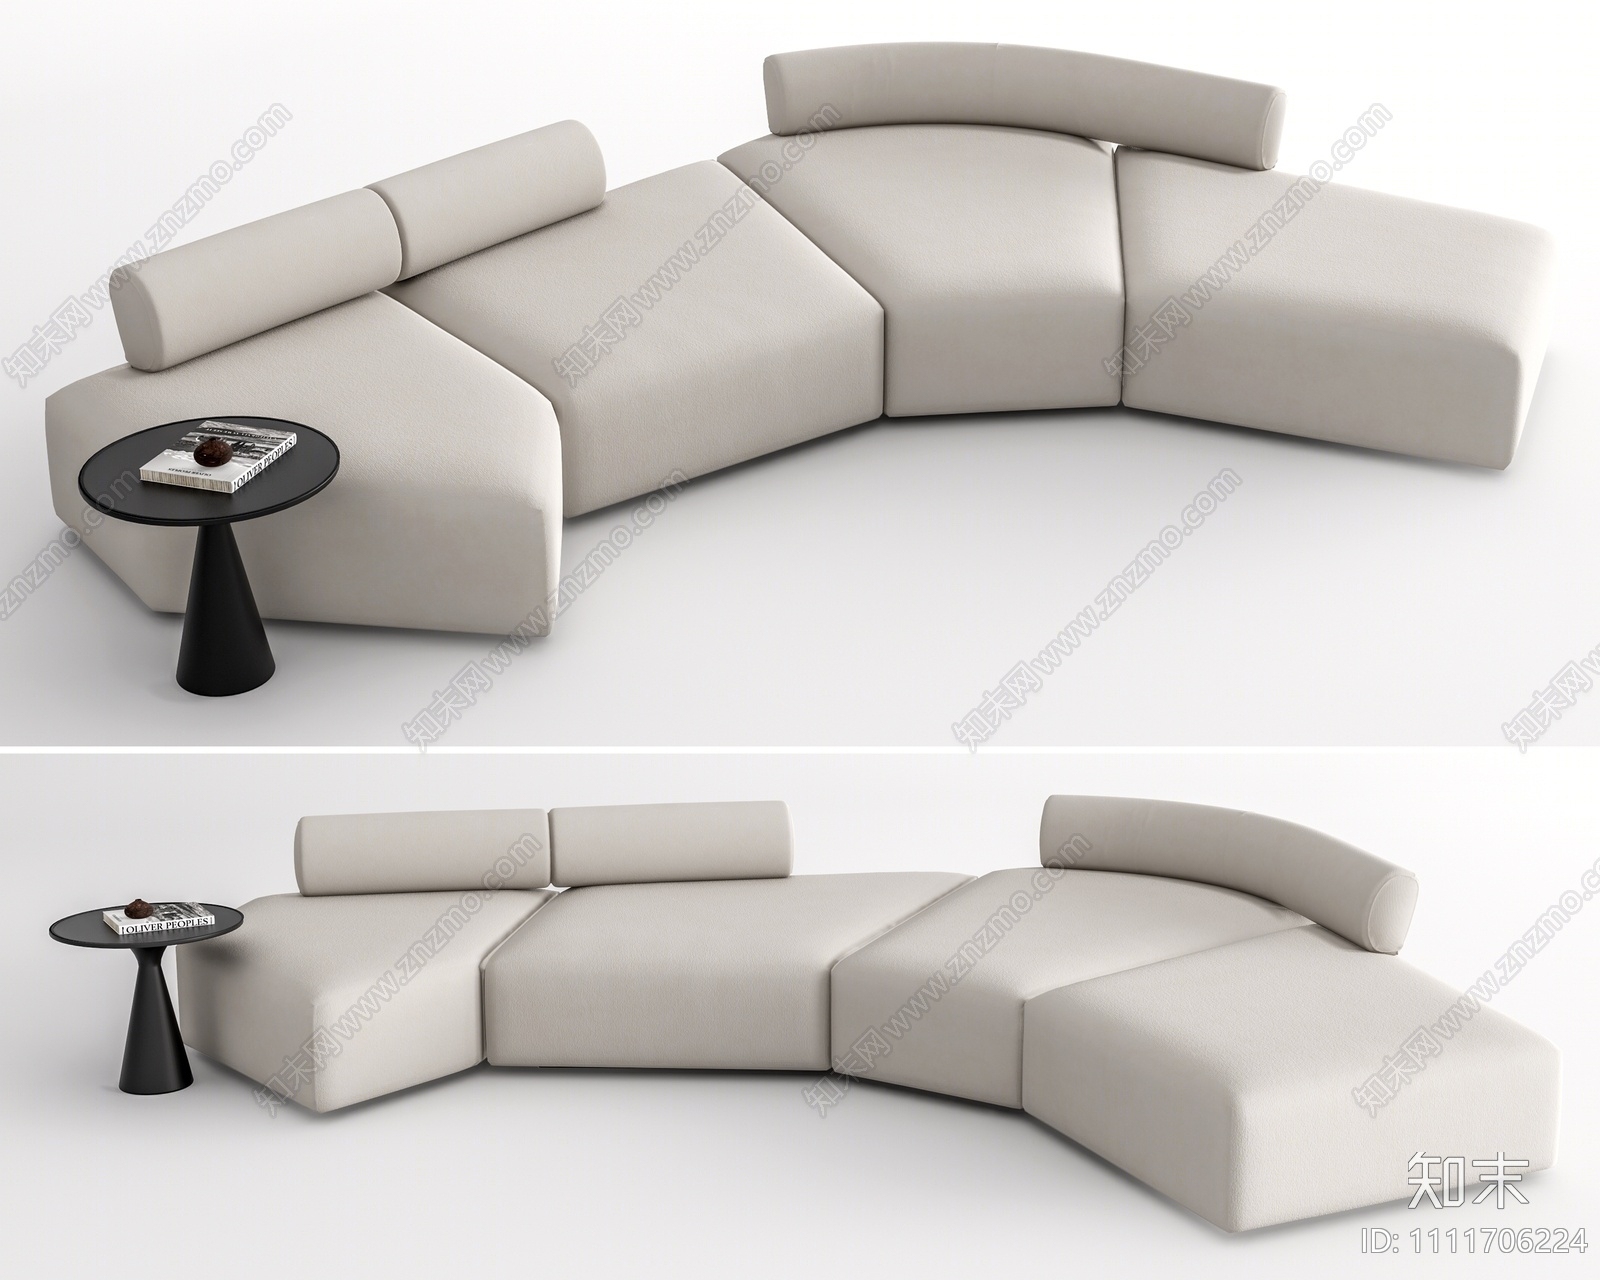 Edra现代异形沙发SU模型下载【ID:1111706224】